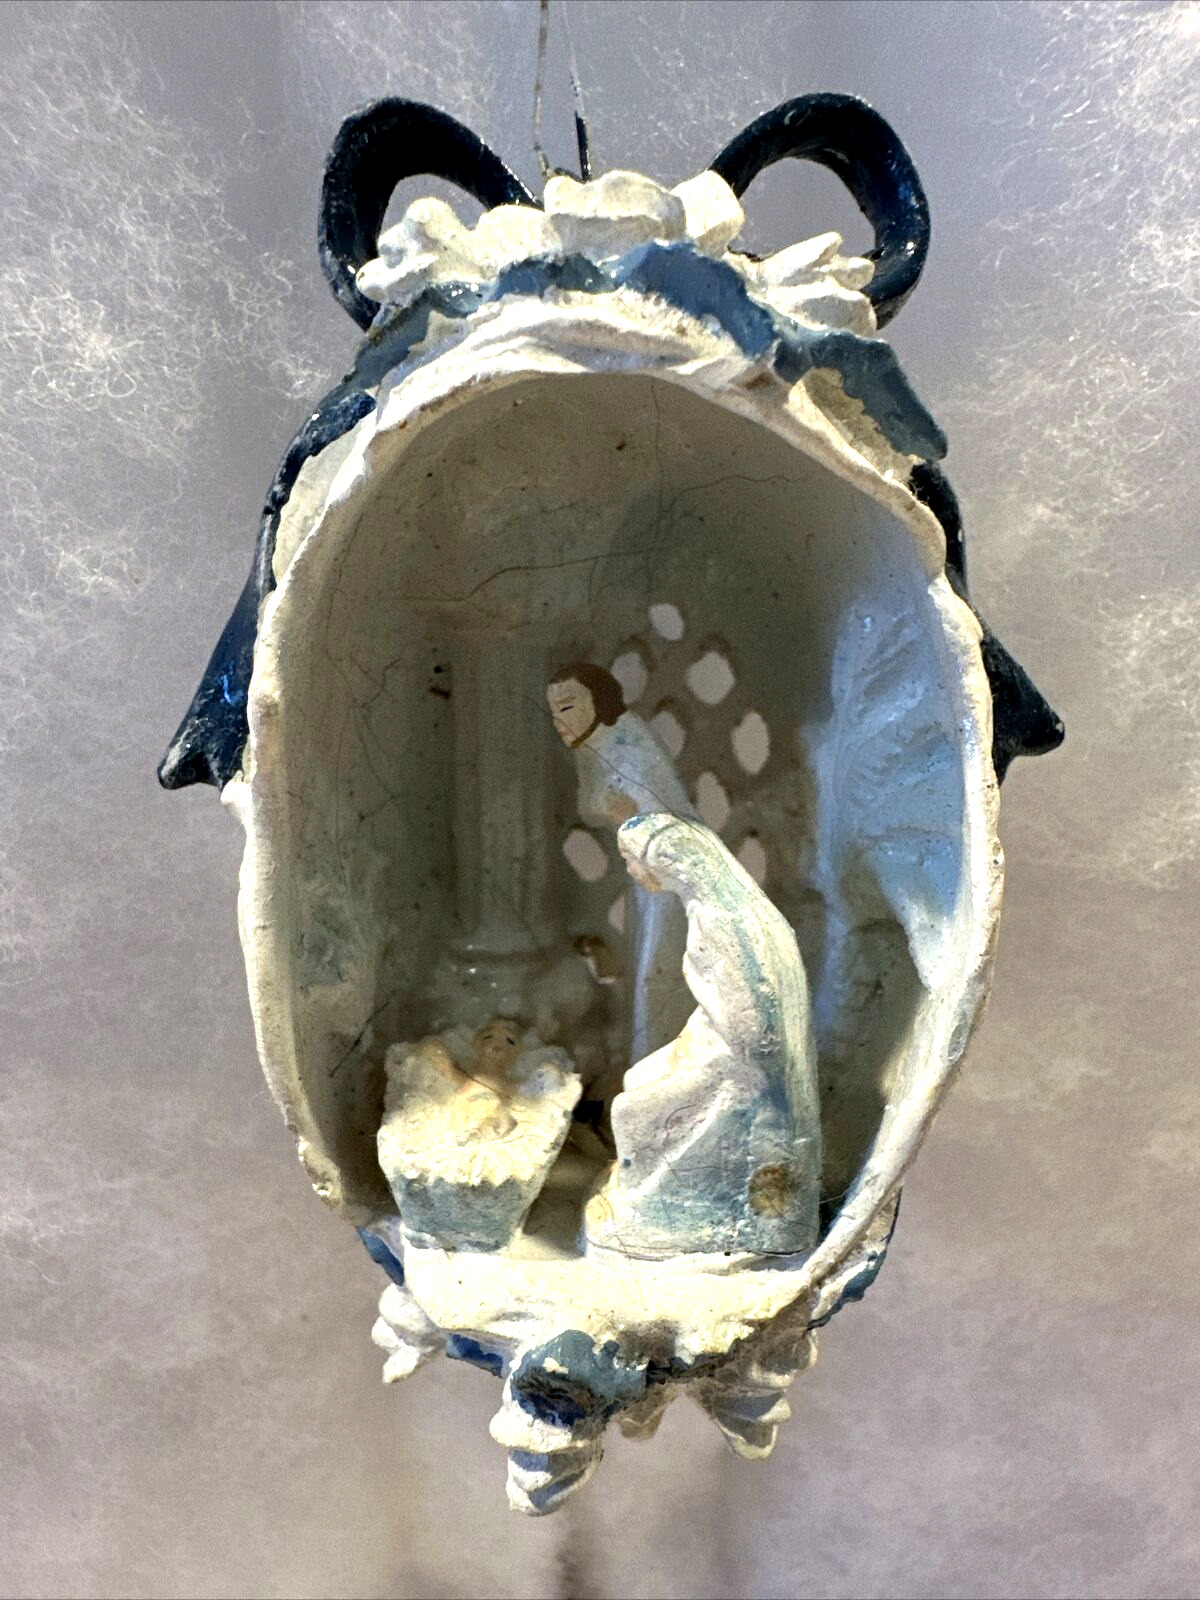 Vintage Silvestri Ceramic Diorama Egg Nativity Scene Easter Christmas Ornament